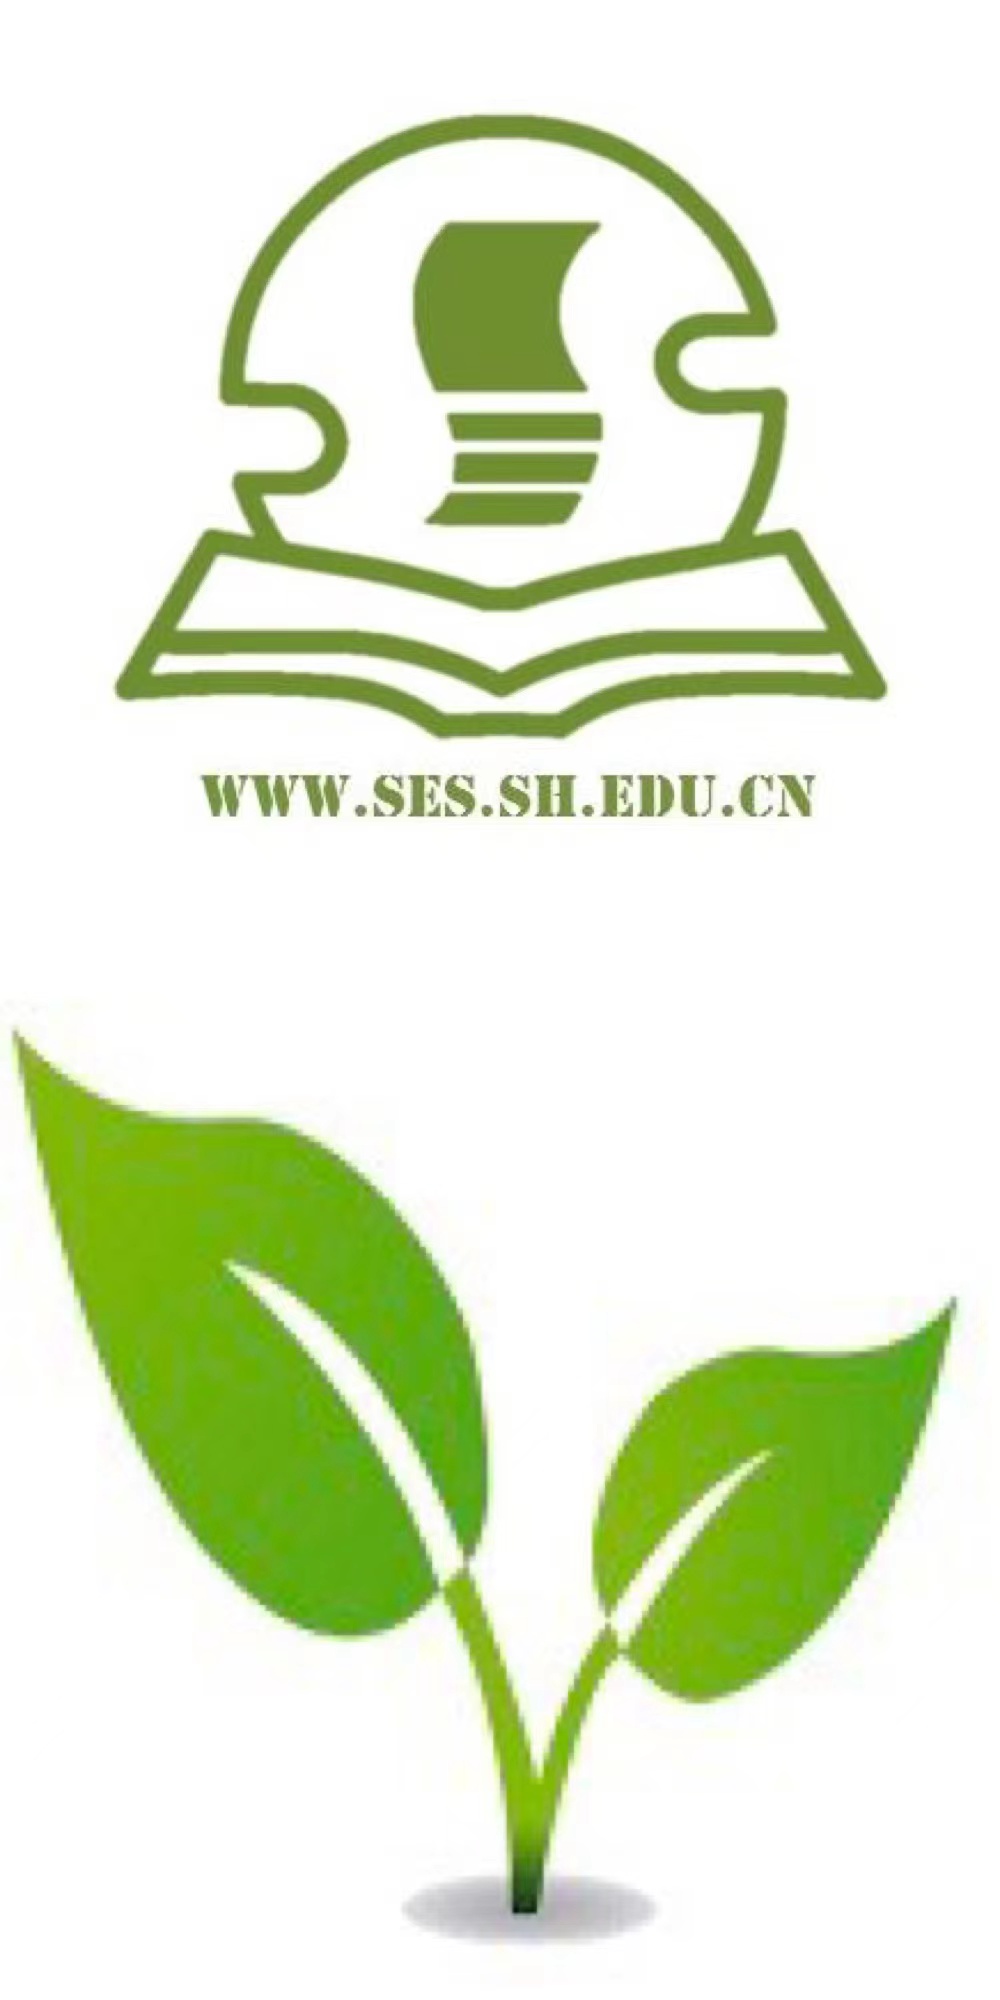 H066-上海实验学校中学部绿叶环境公益社